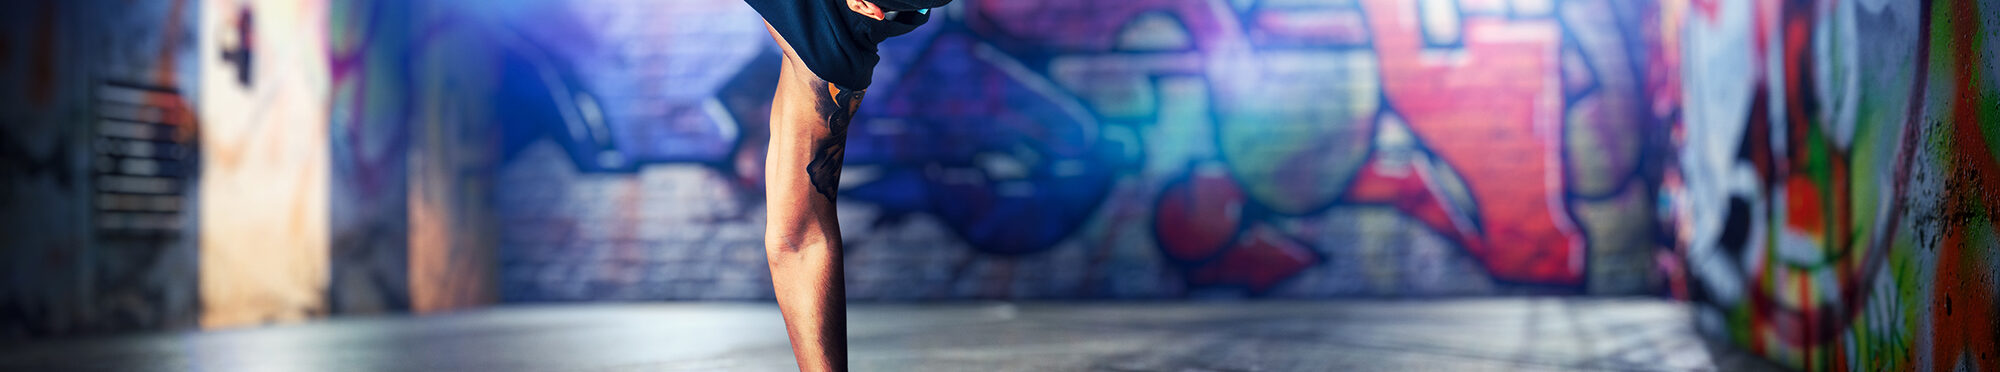 Motivbild Graffiti und Breakdance [Foto: ©chaoss - stock.adobe.com]